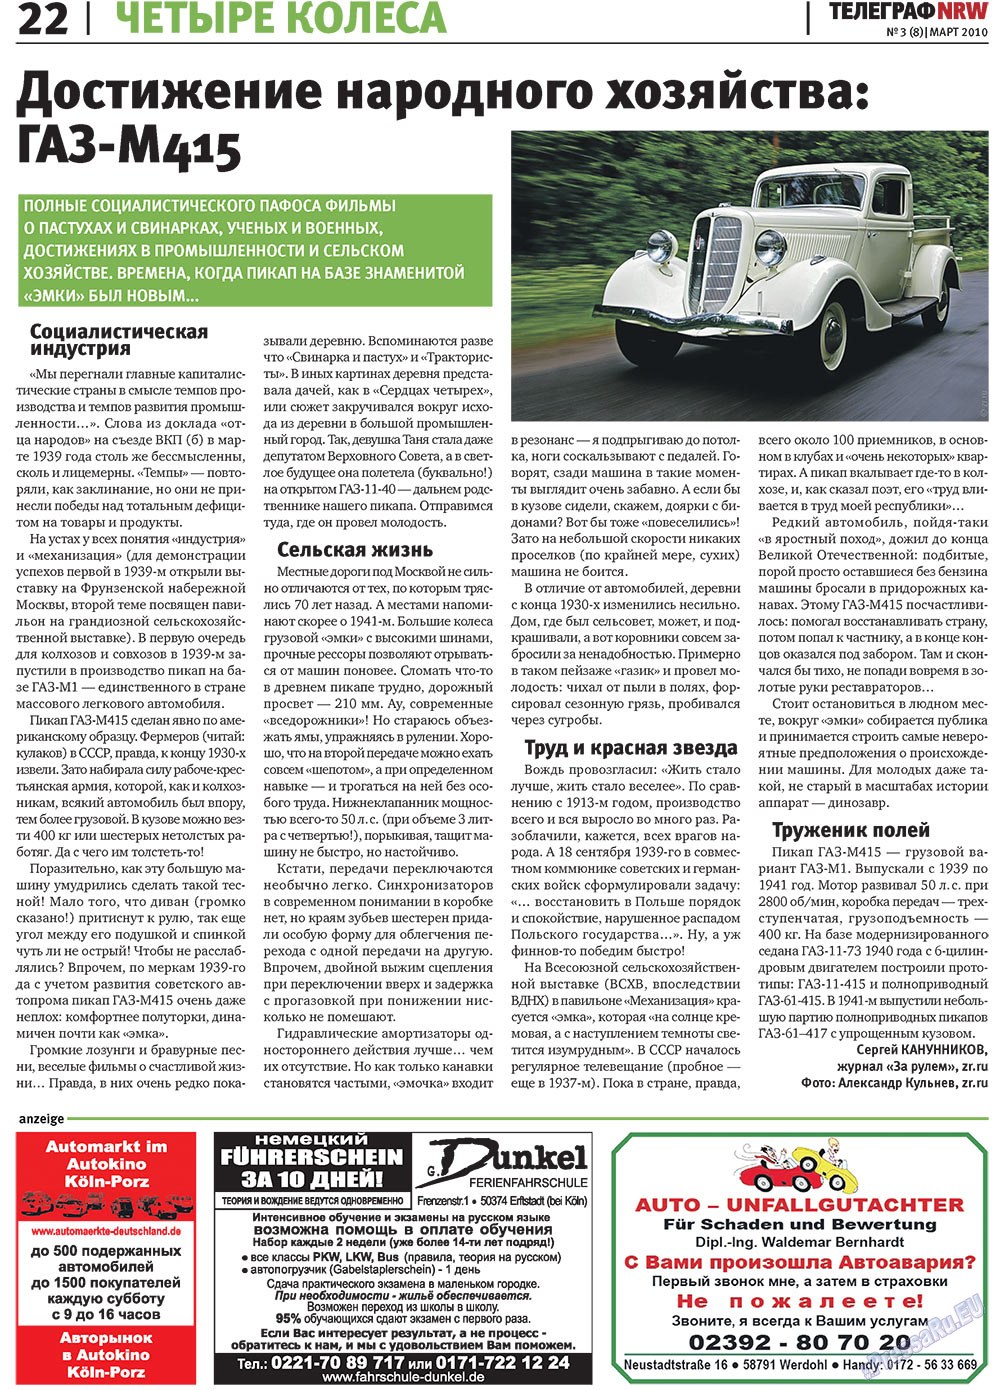 Телеграф NRW, газета. 2010 №3 стр.22